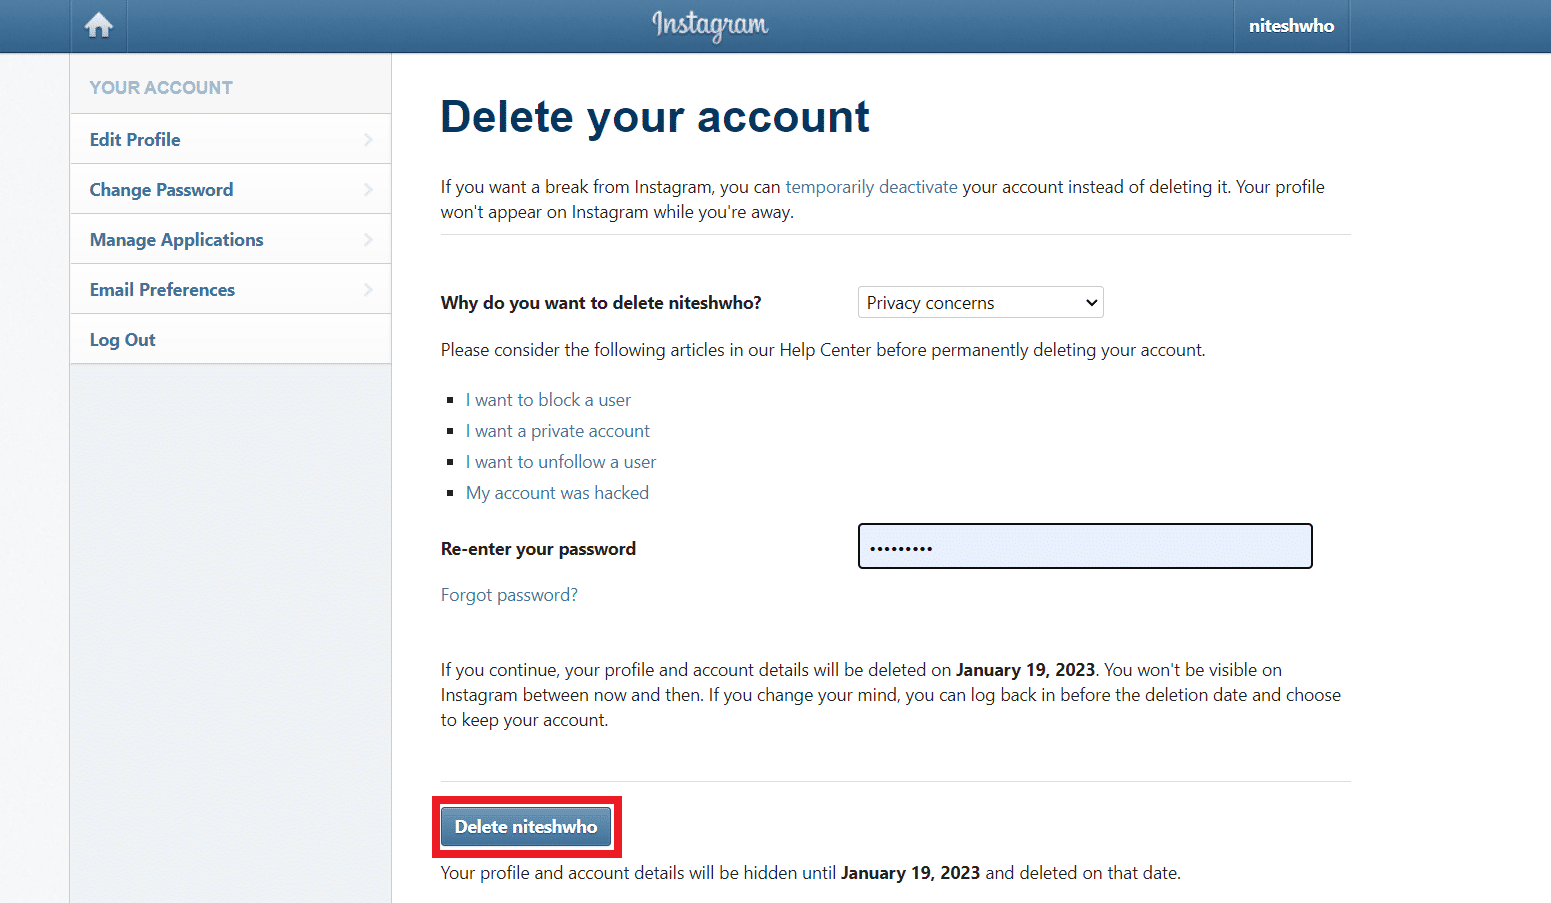 click on the Delete [username] option